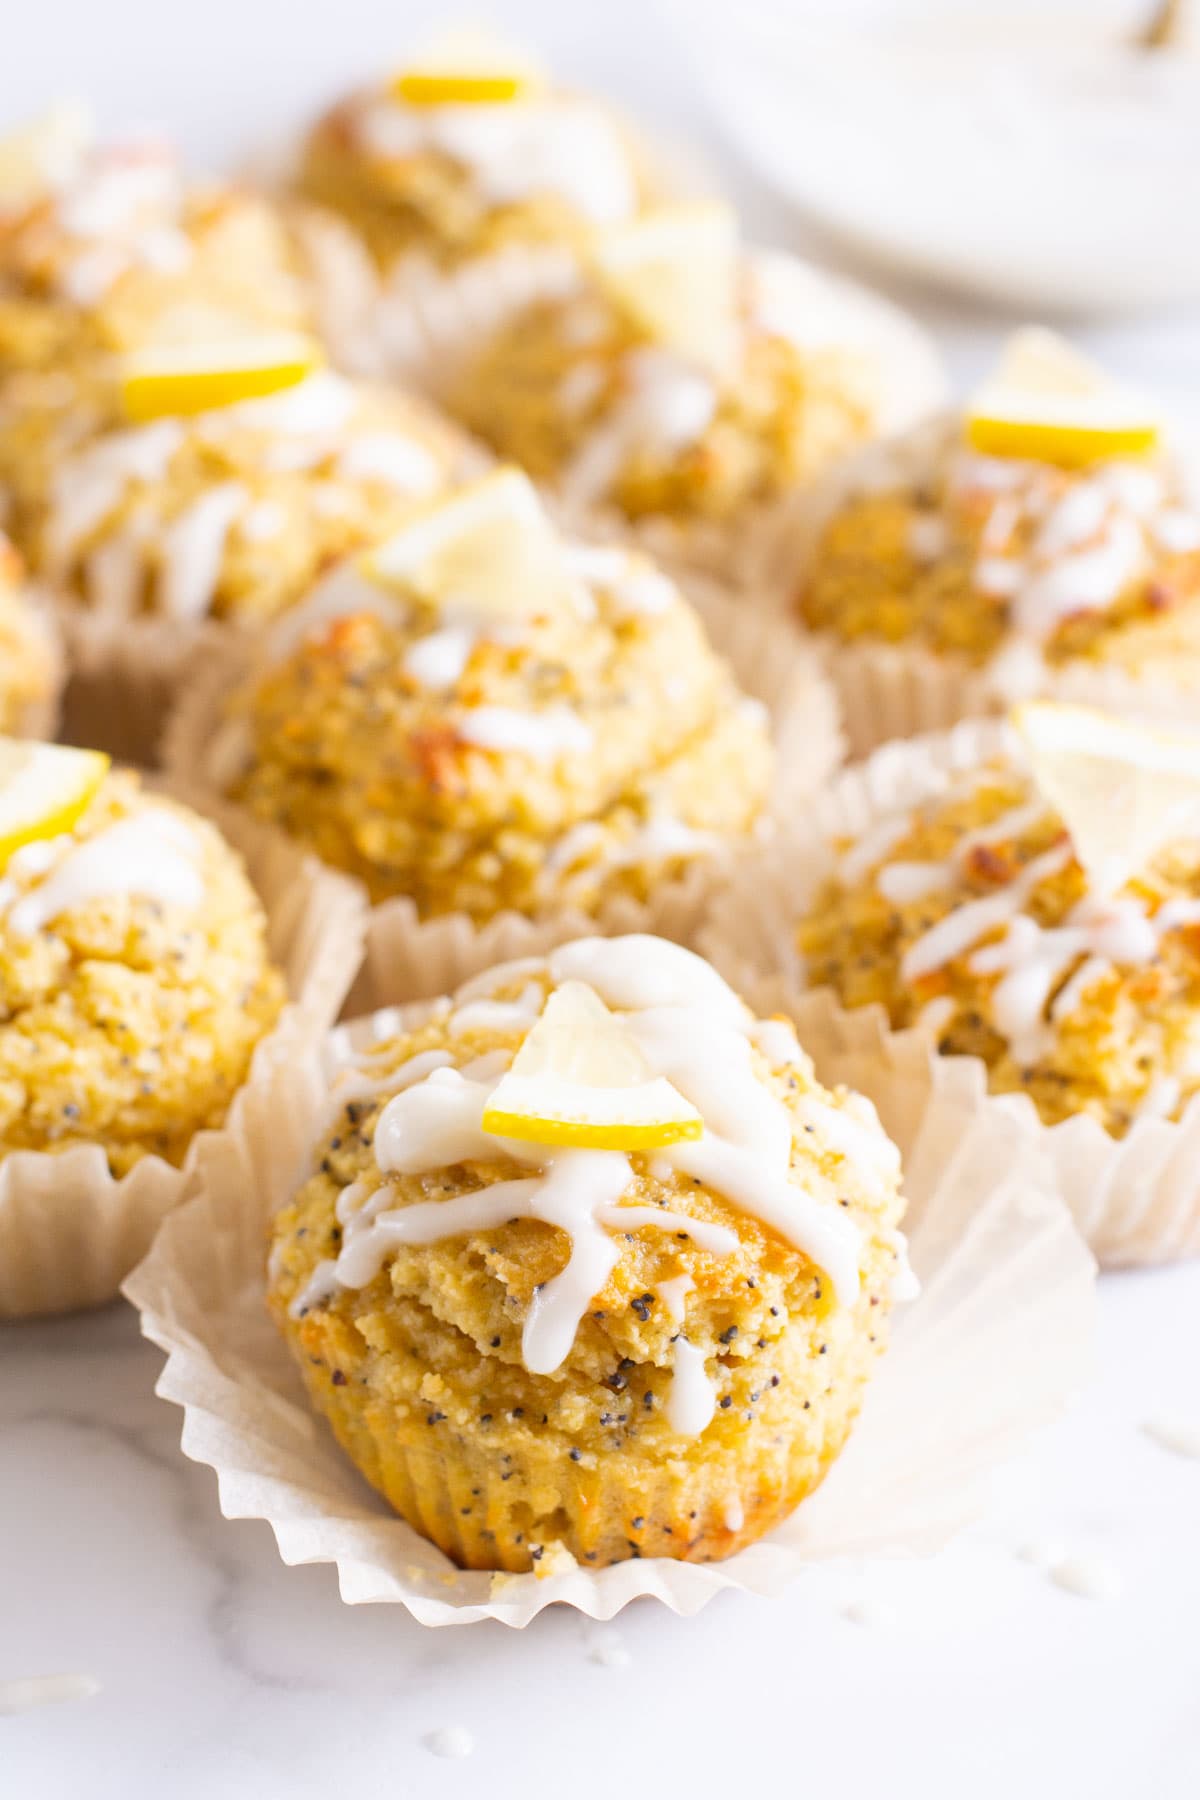 Healthy lemon poppy seed muffins with glaze and fresh lemon garnish on top. 